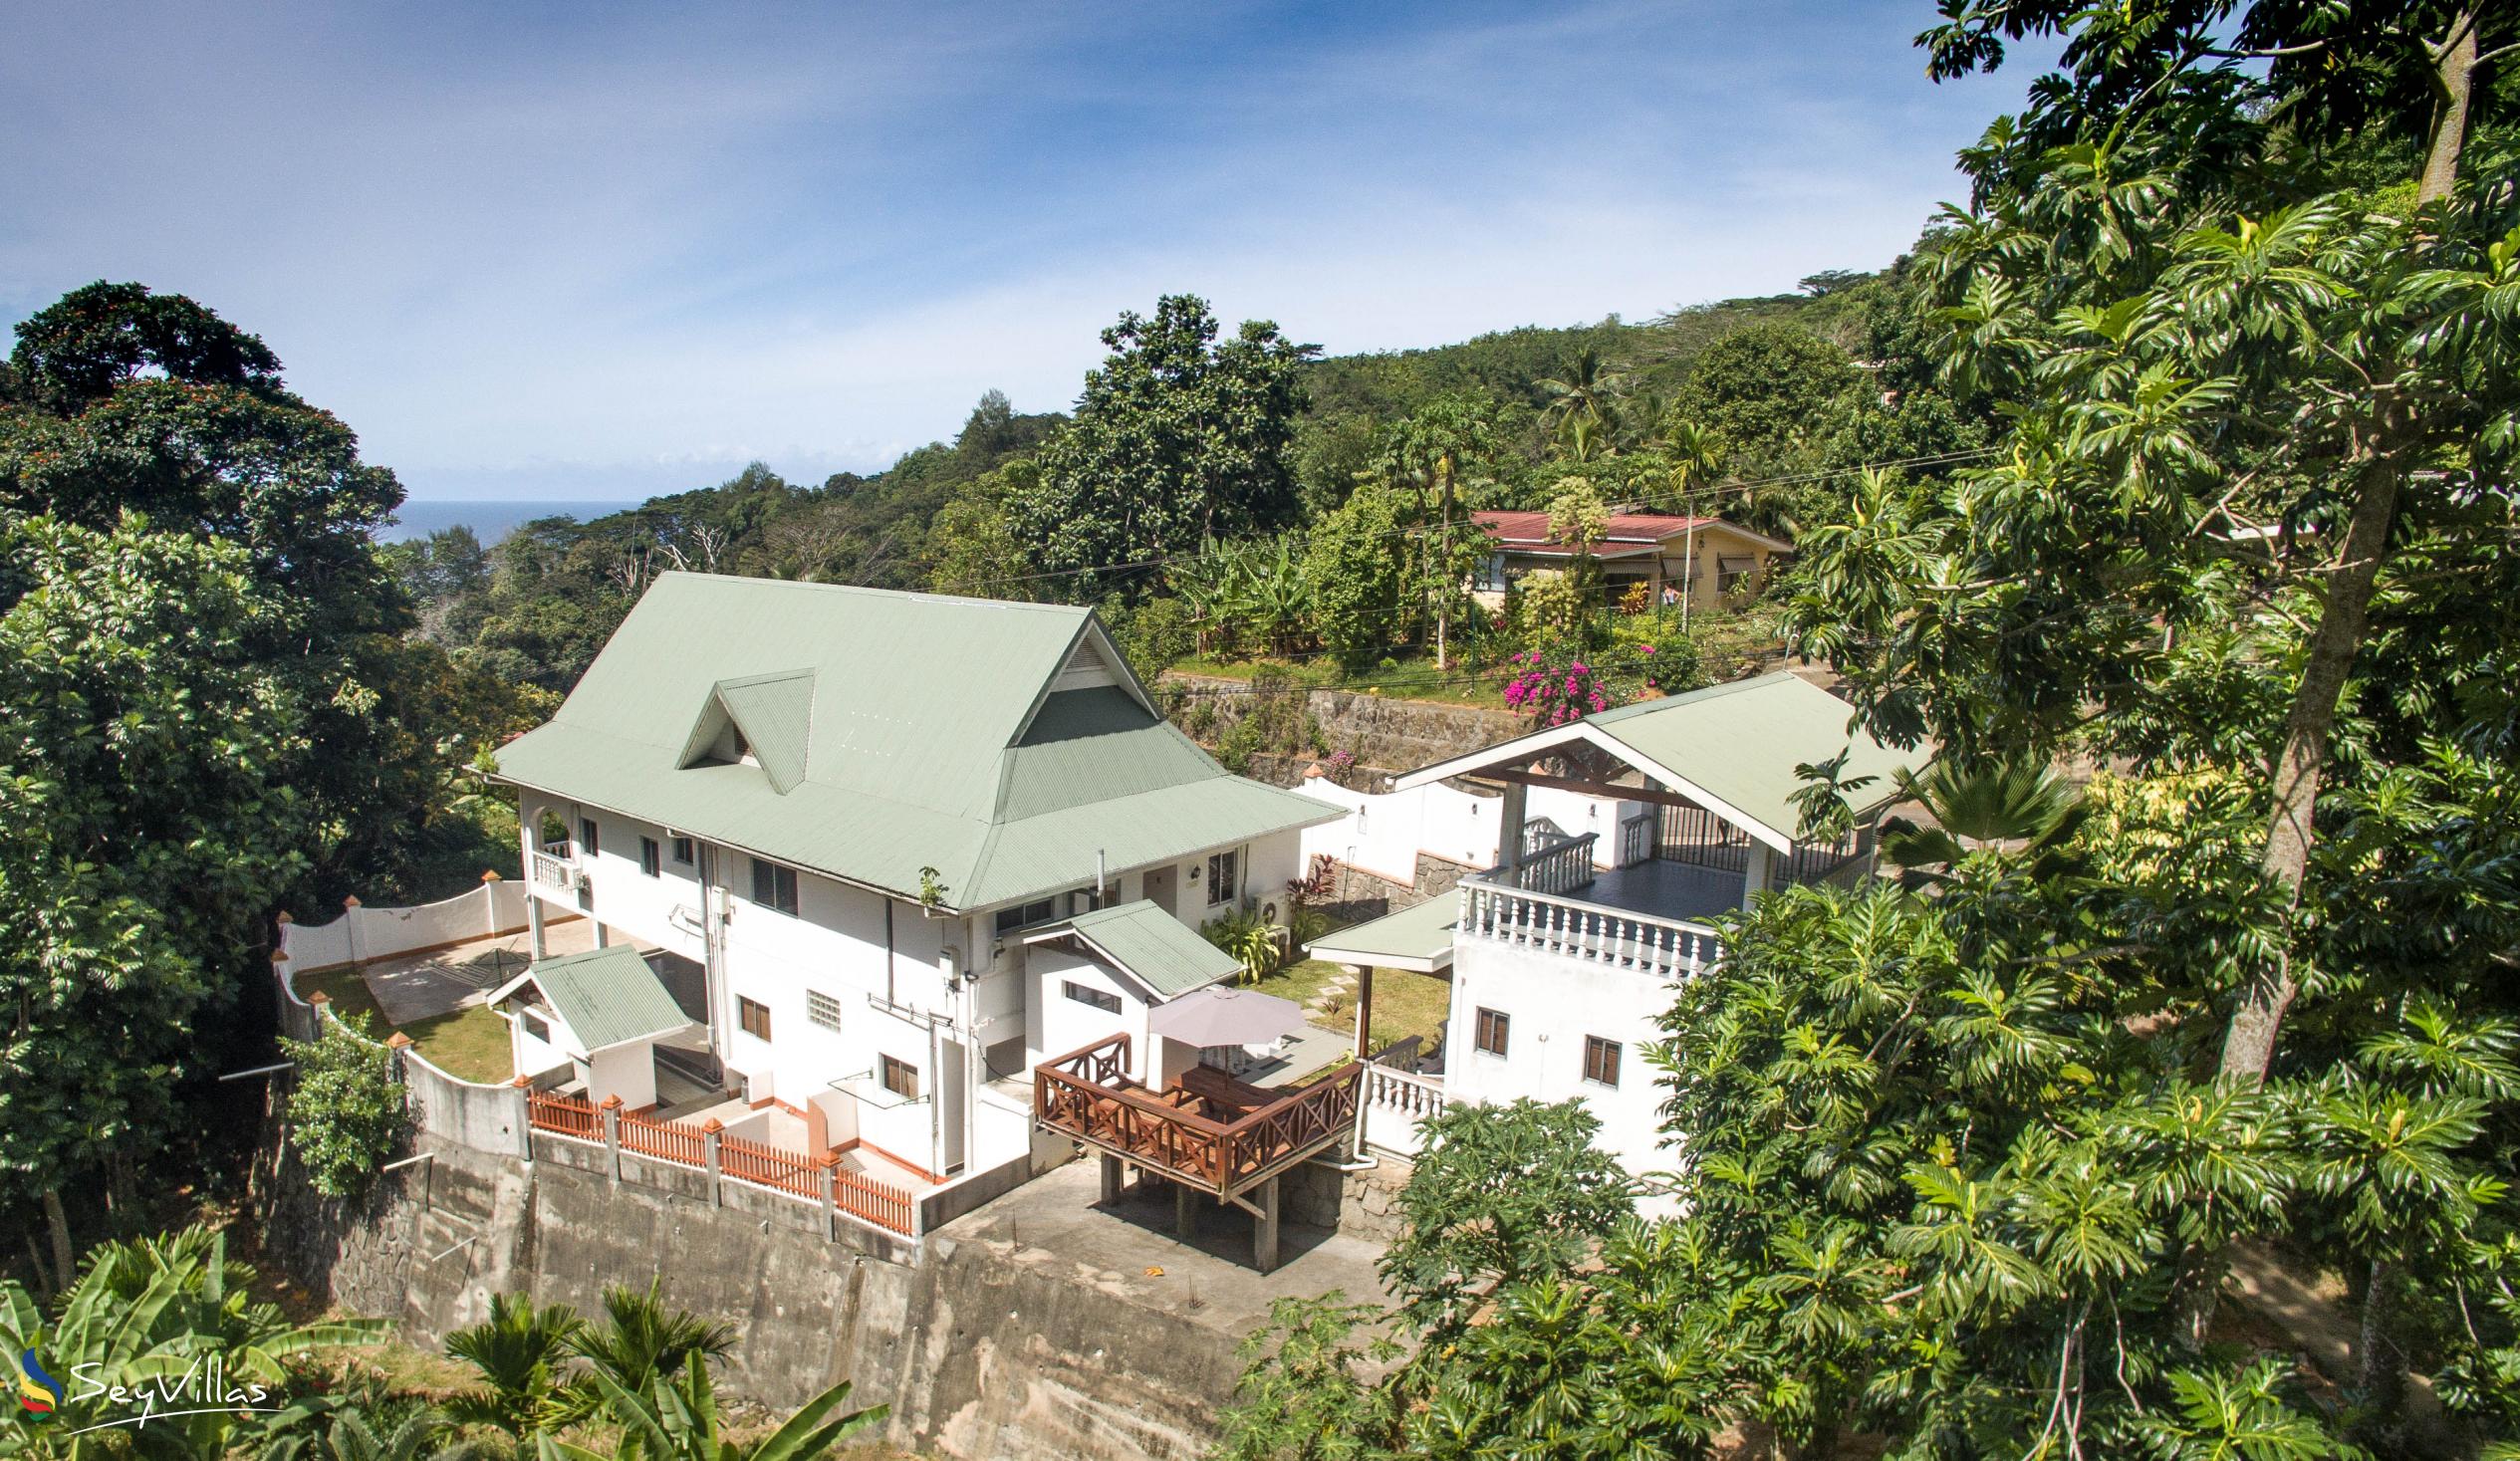 Foto 135: Bougainvillea - Komplettes Bougainvillea-Anwesen - Mahé (Seychellen)